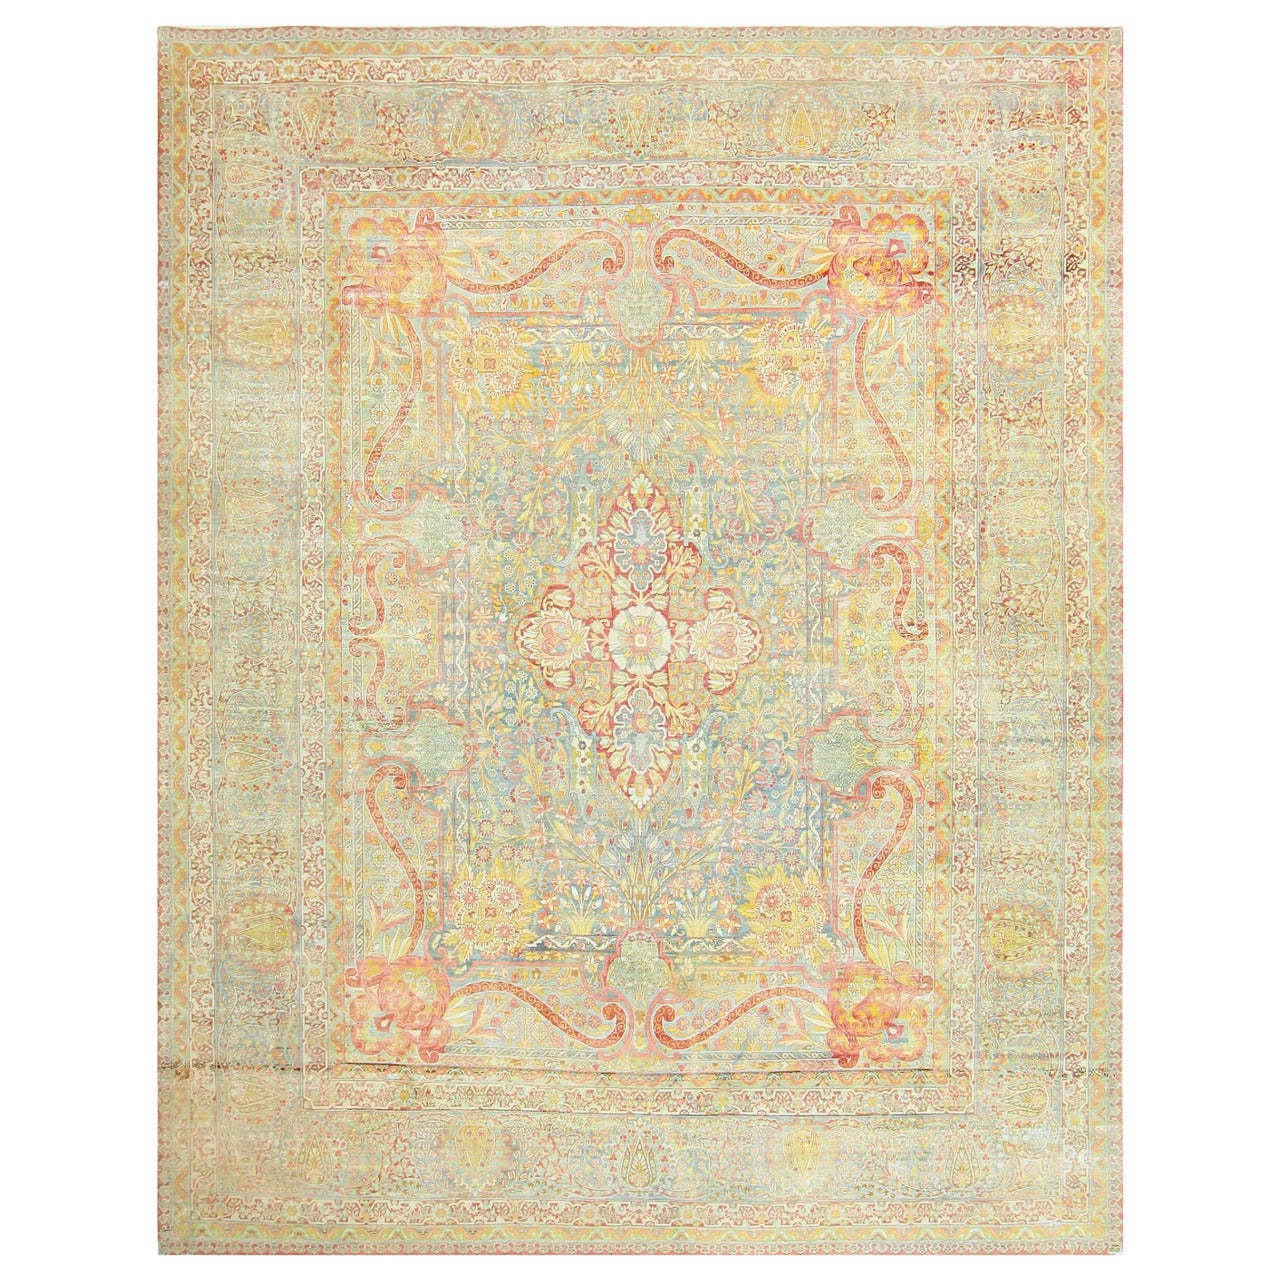 Gorgeous Antique Persian Kerman Carpet